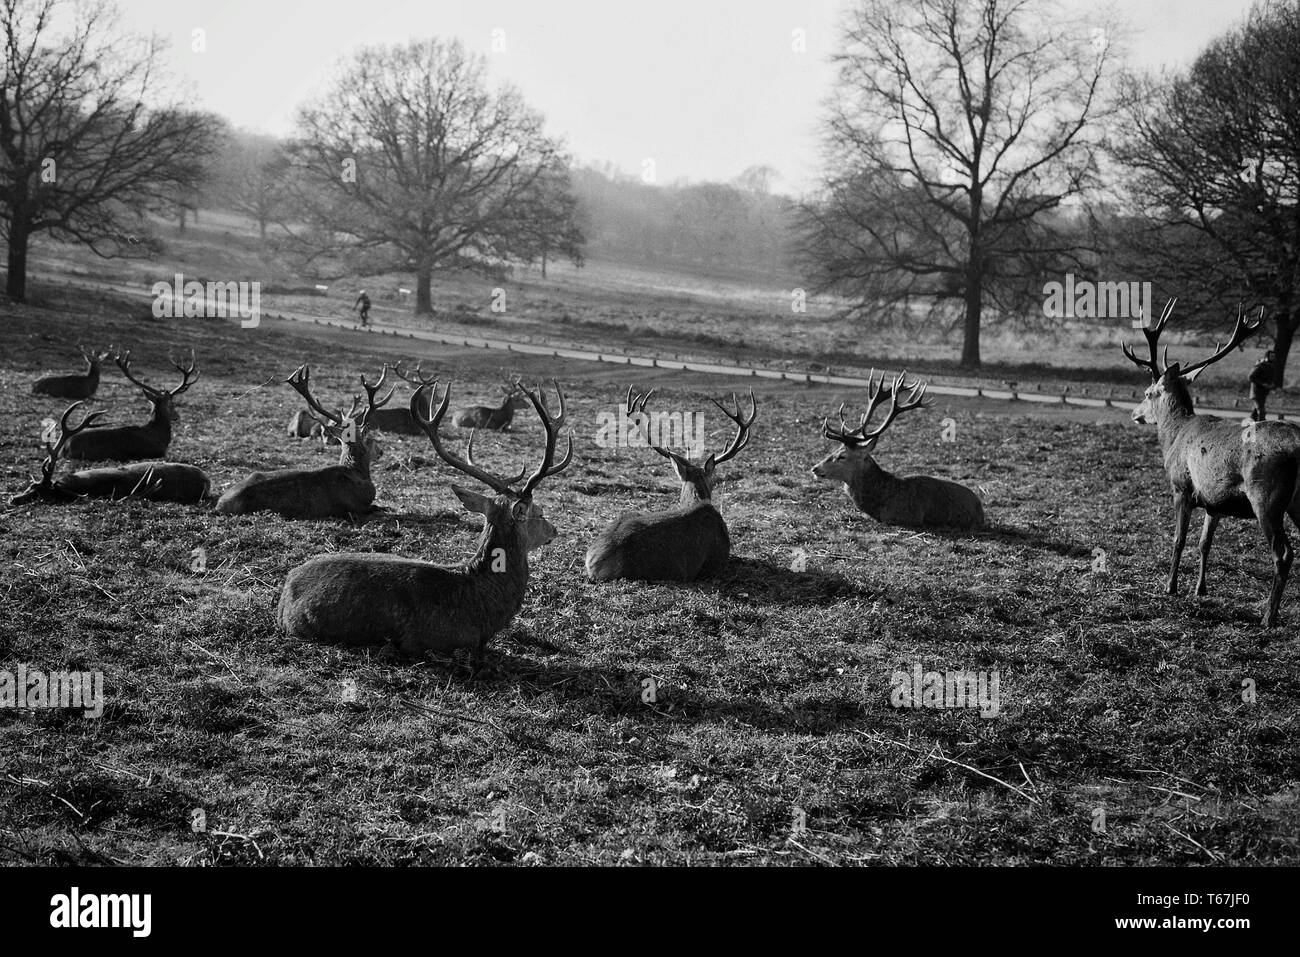 A herd of deer resting in a field Stock Photo